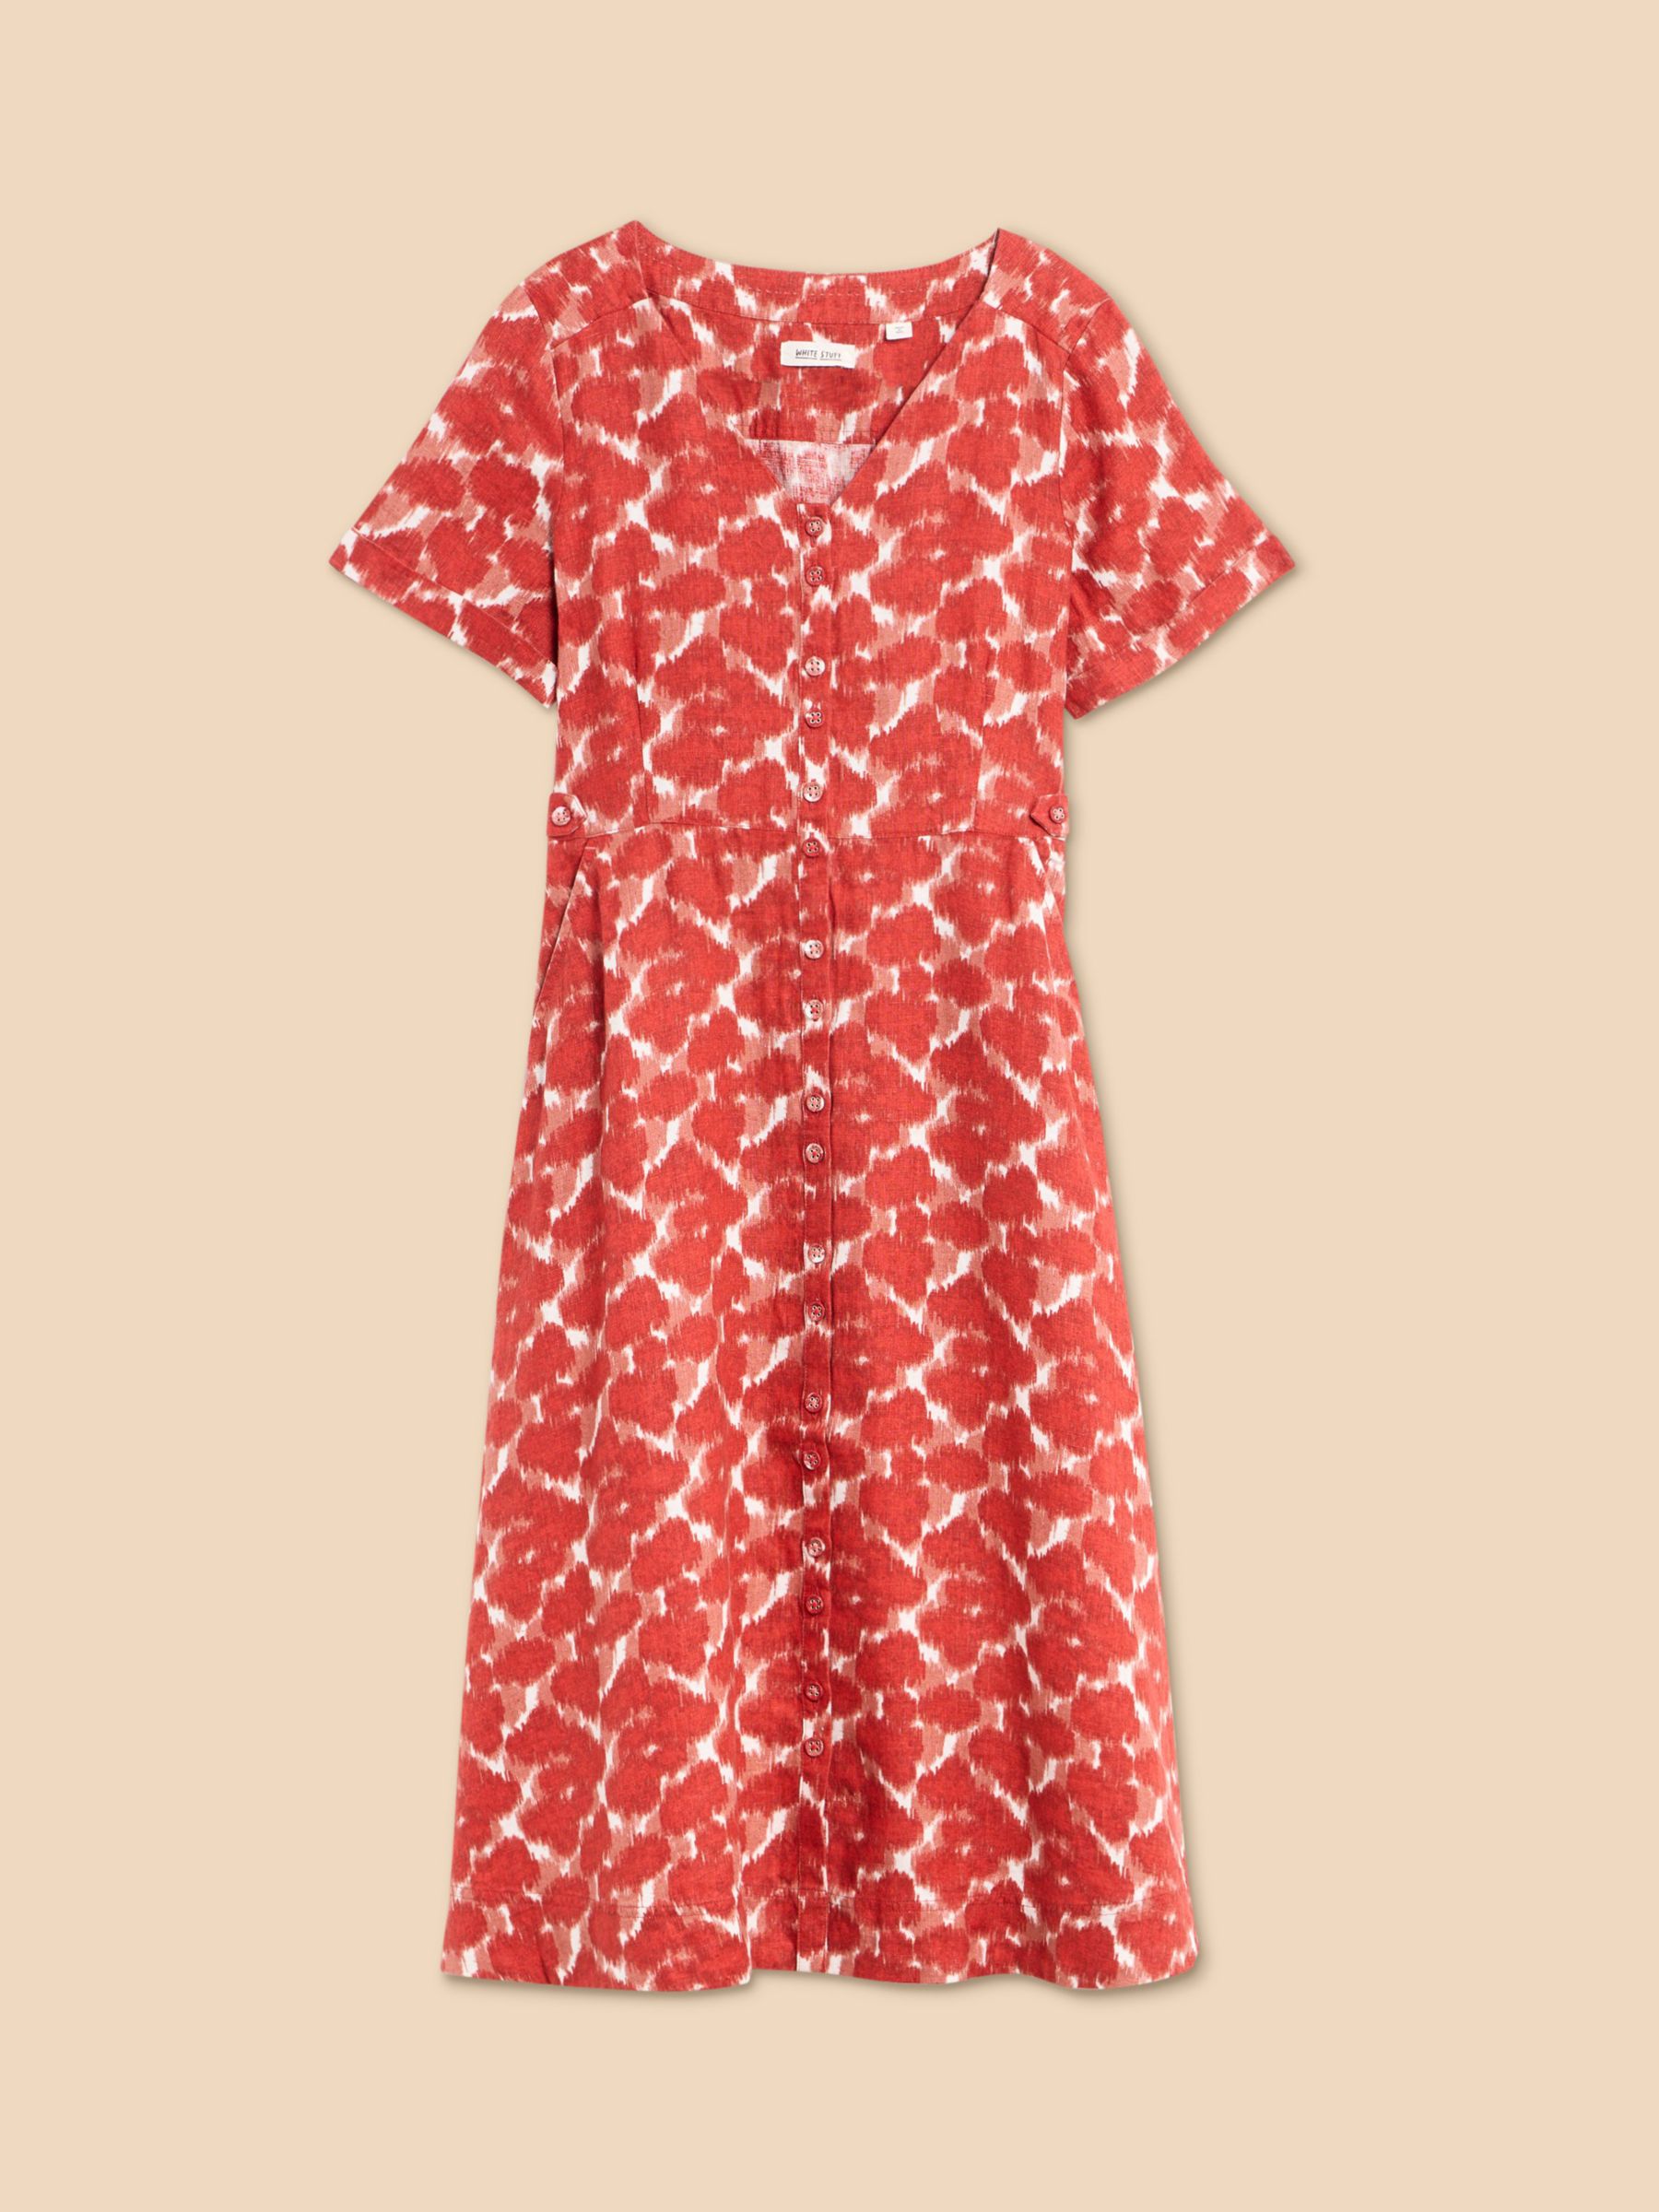 White Stuff Ivy Abstract Print Linen Midi Dress, Red, 12